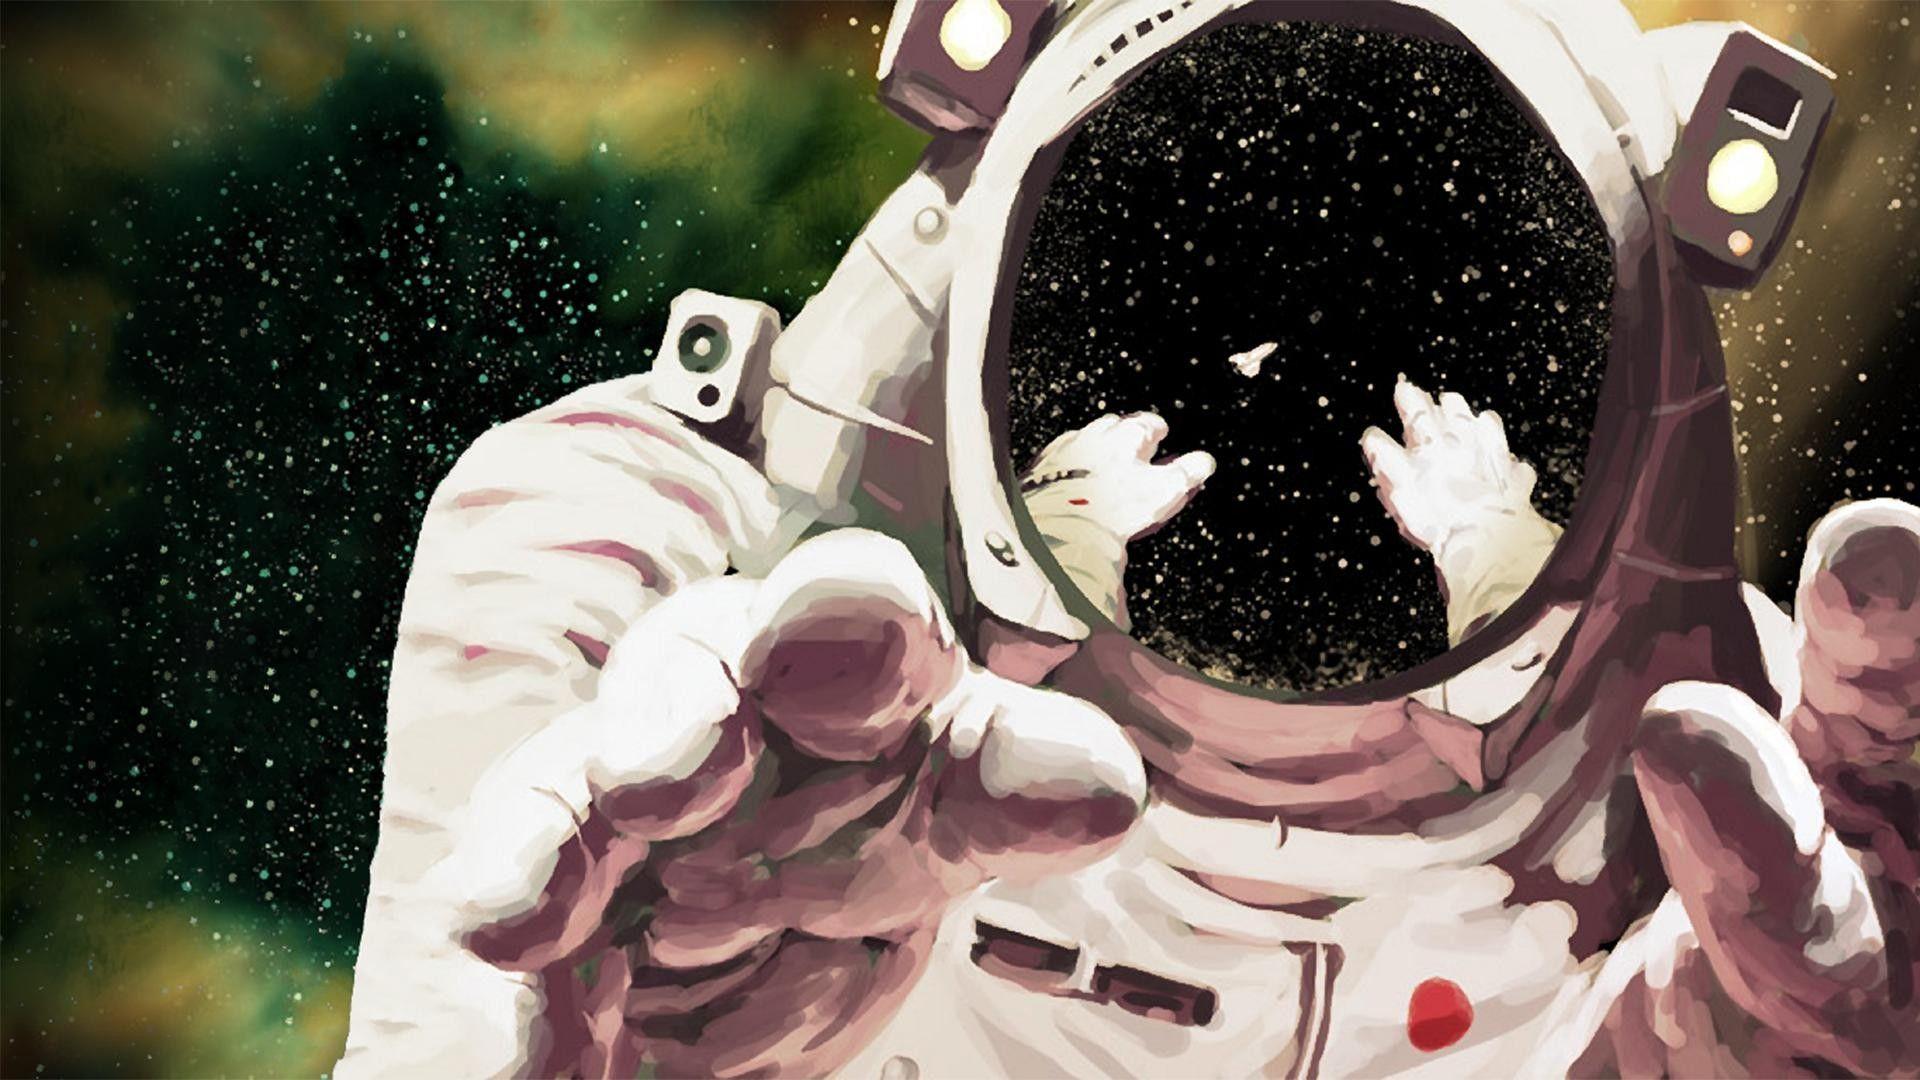 Wallpaper, illustration, anime, artwork, space art, Lost, astronaut